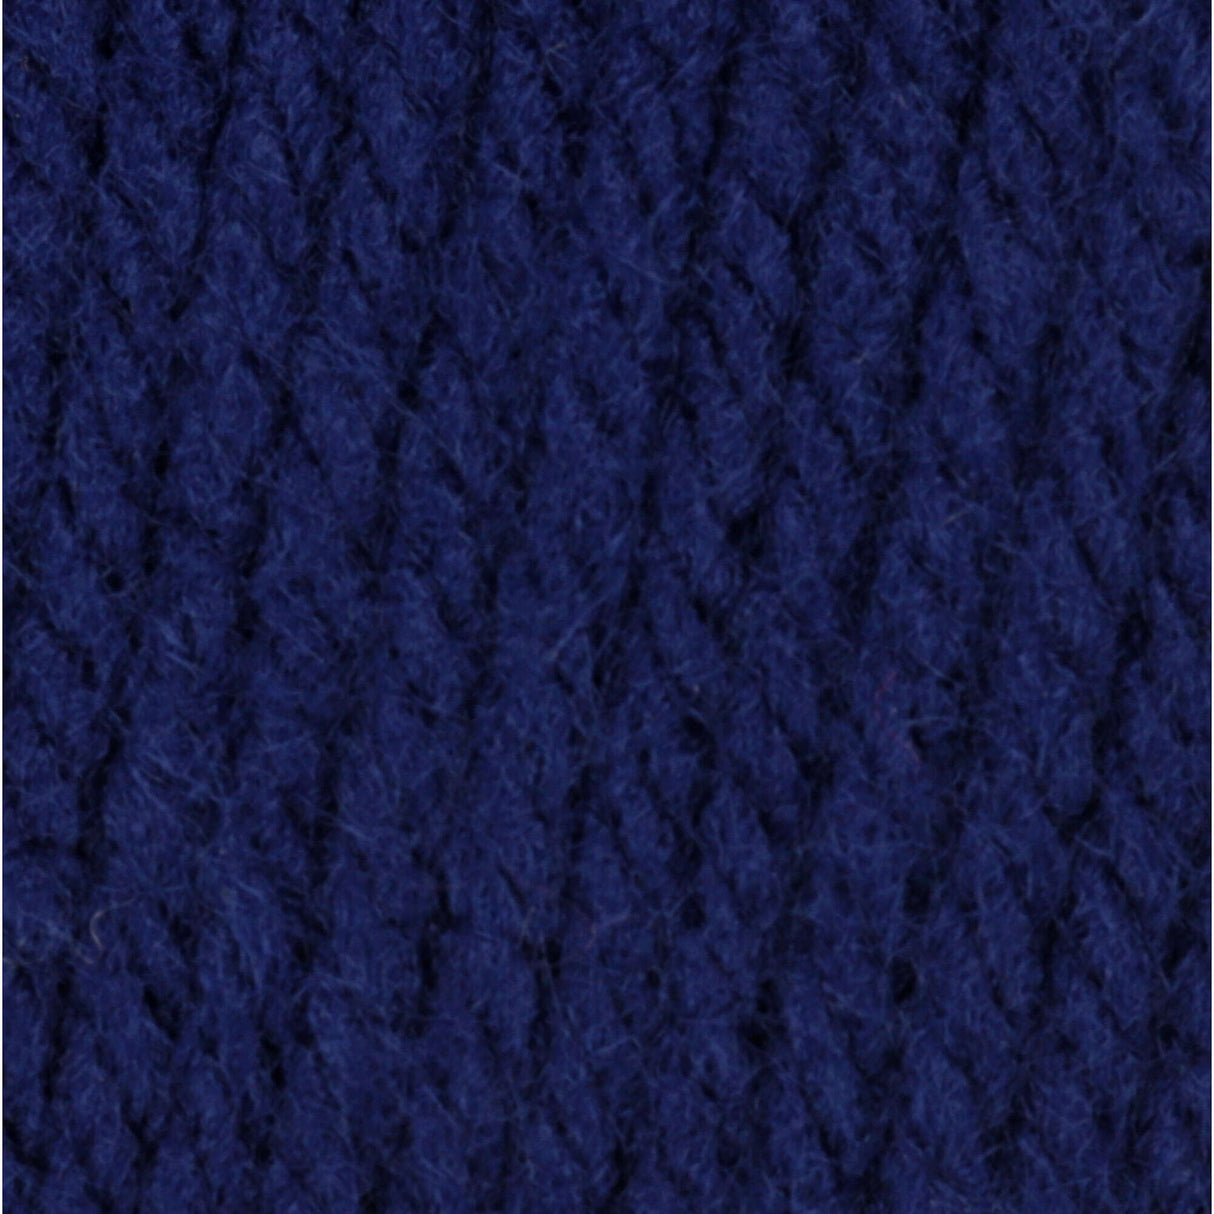 Ascending Braid Knit Blanket